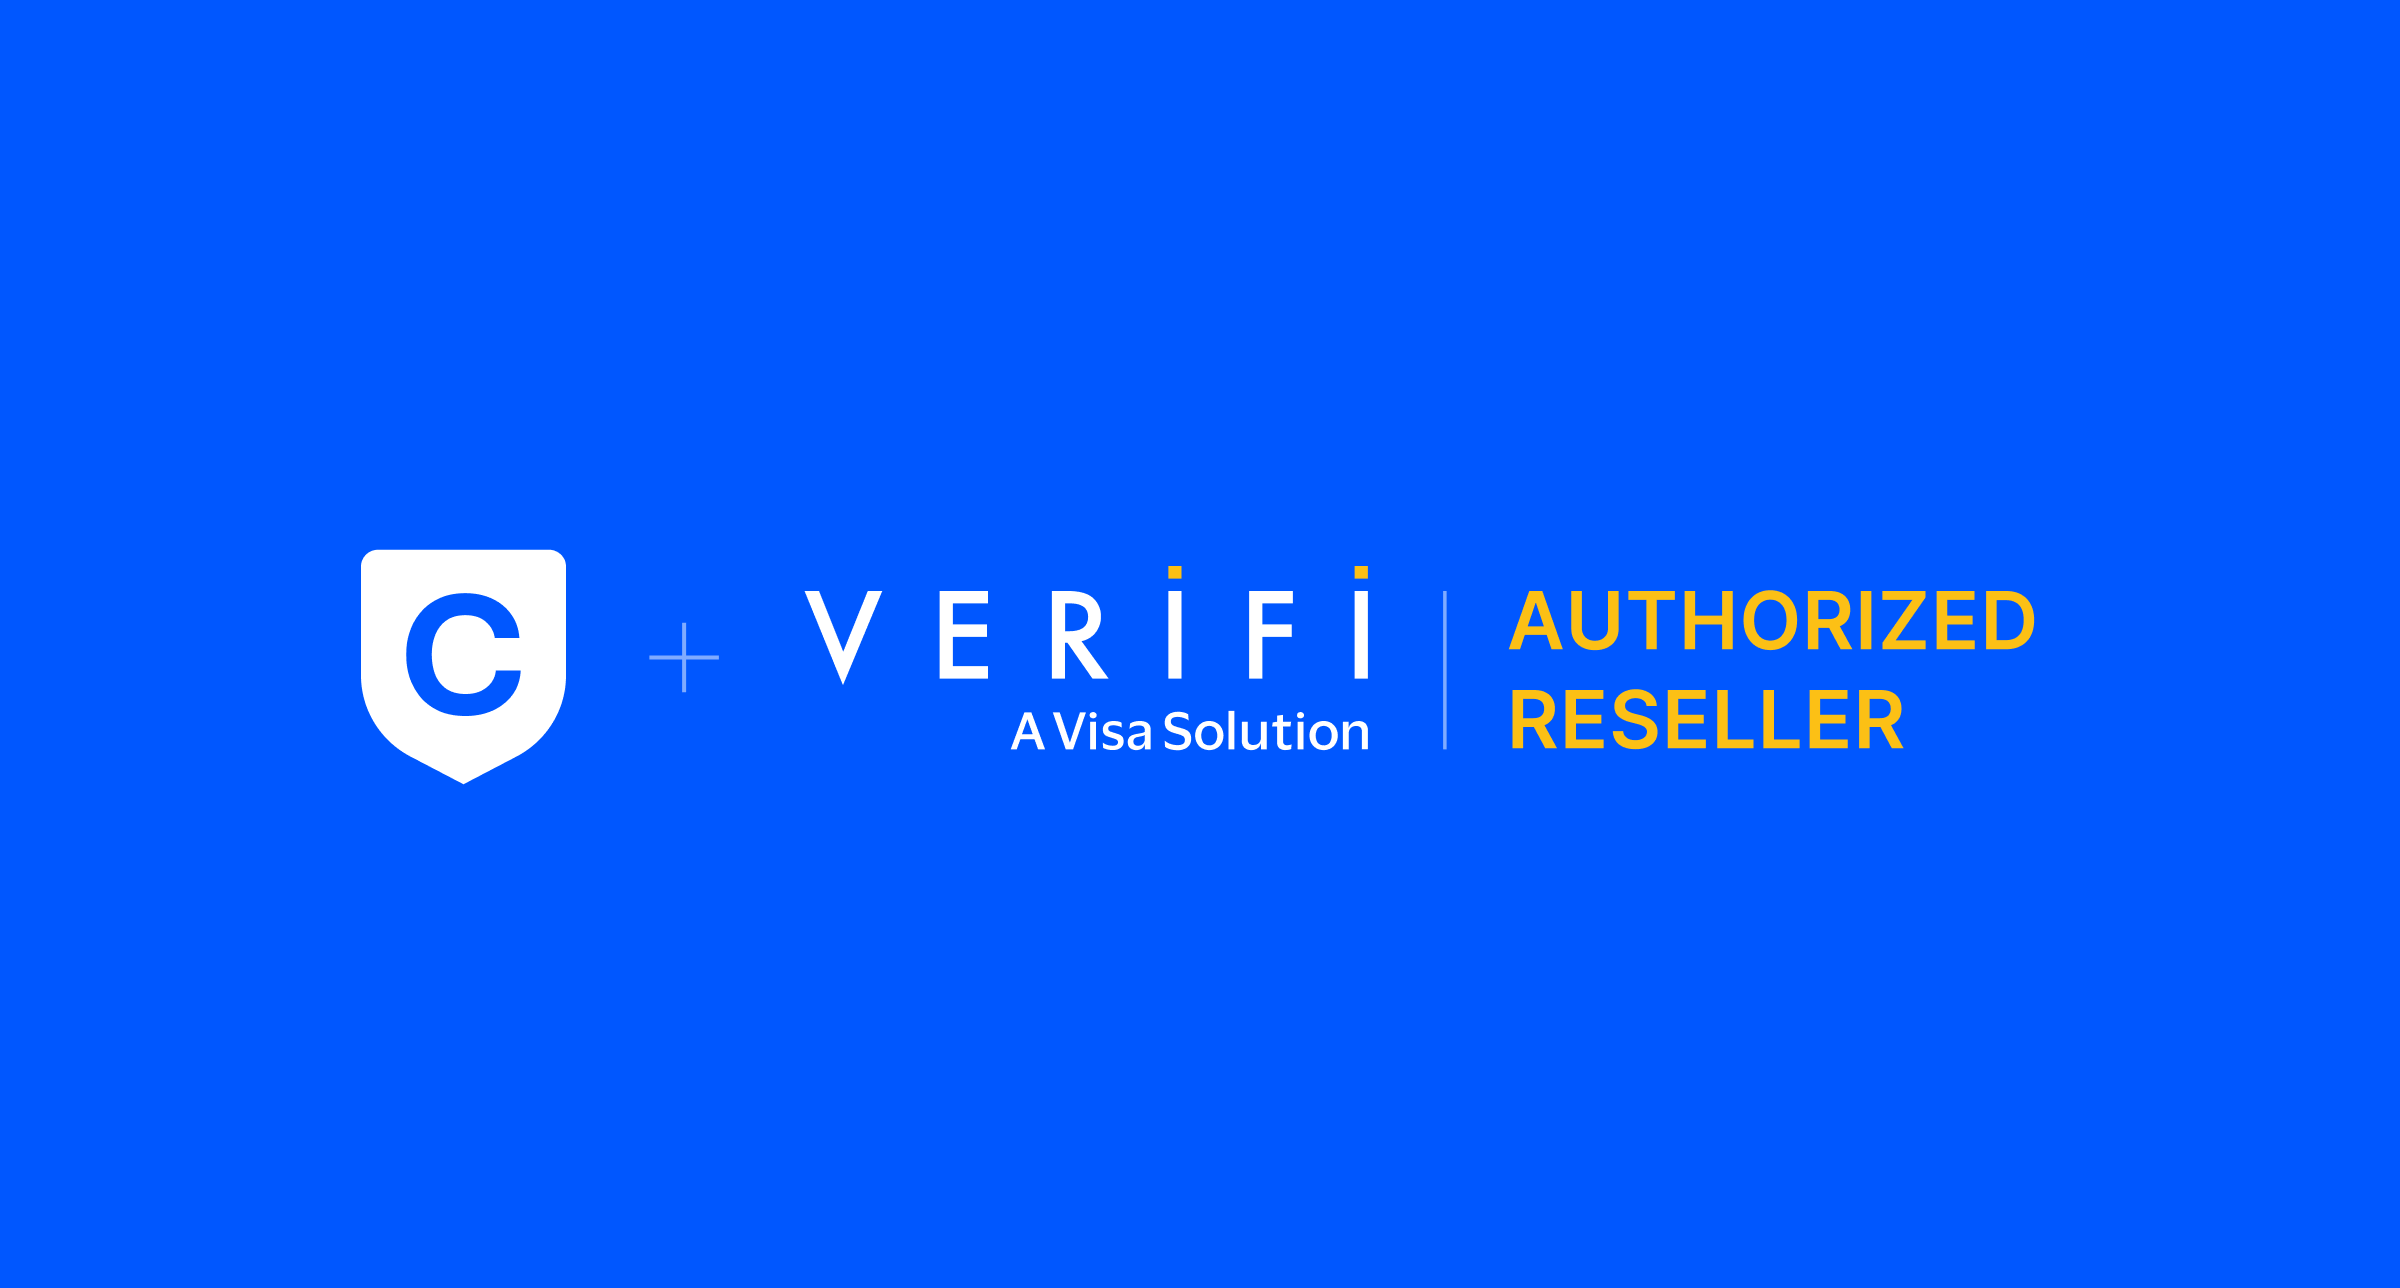 verifi authorized reseller